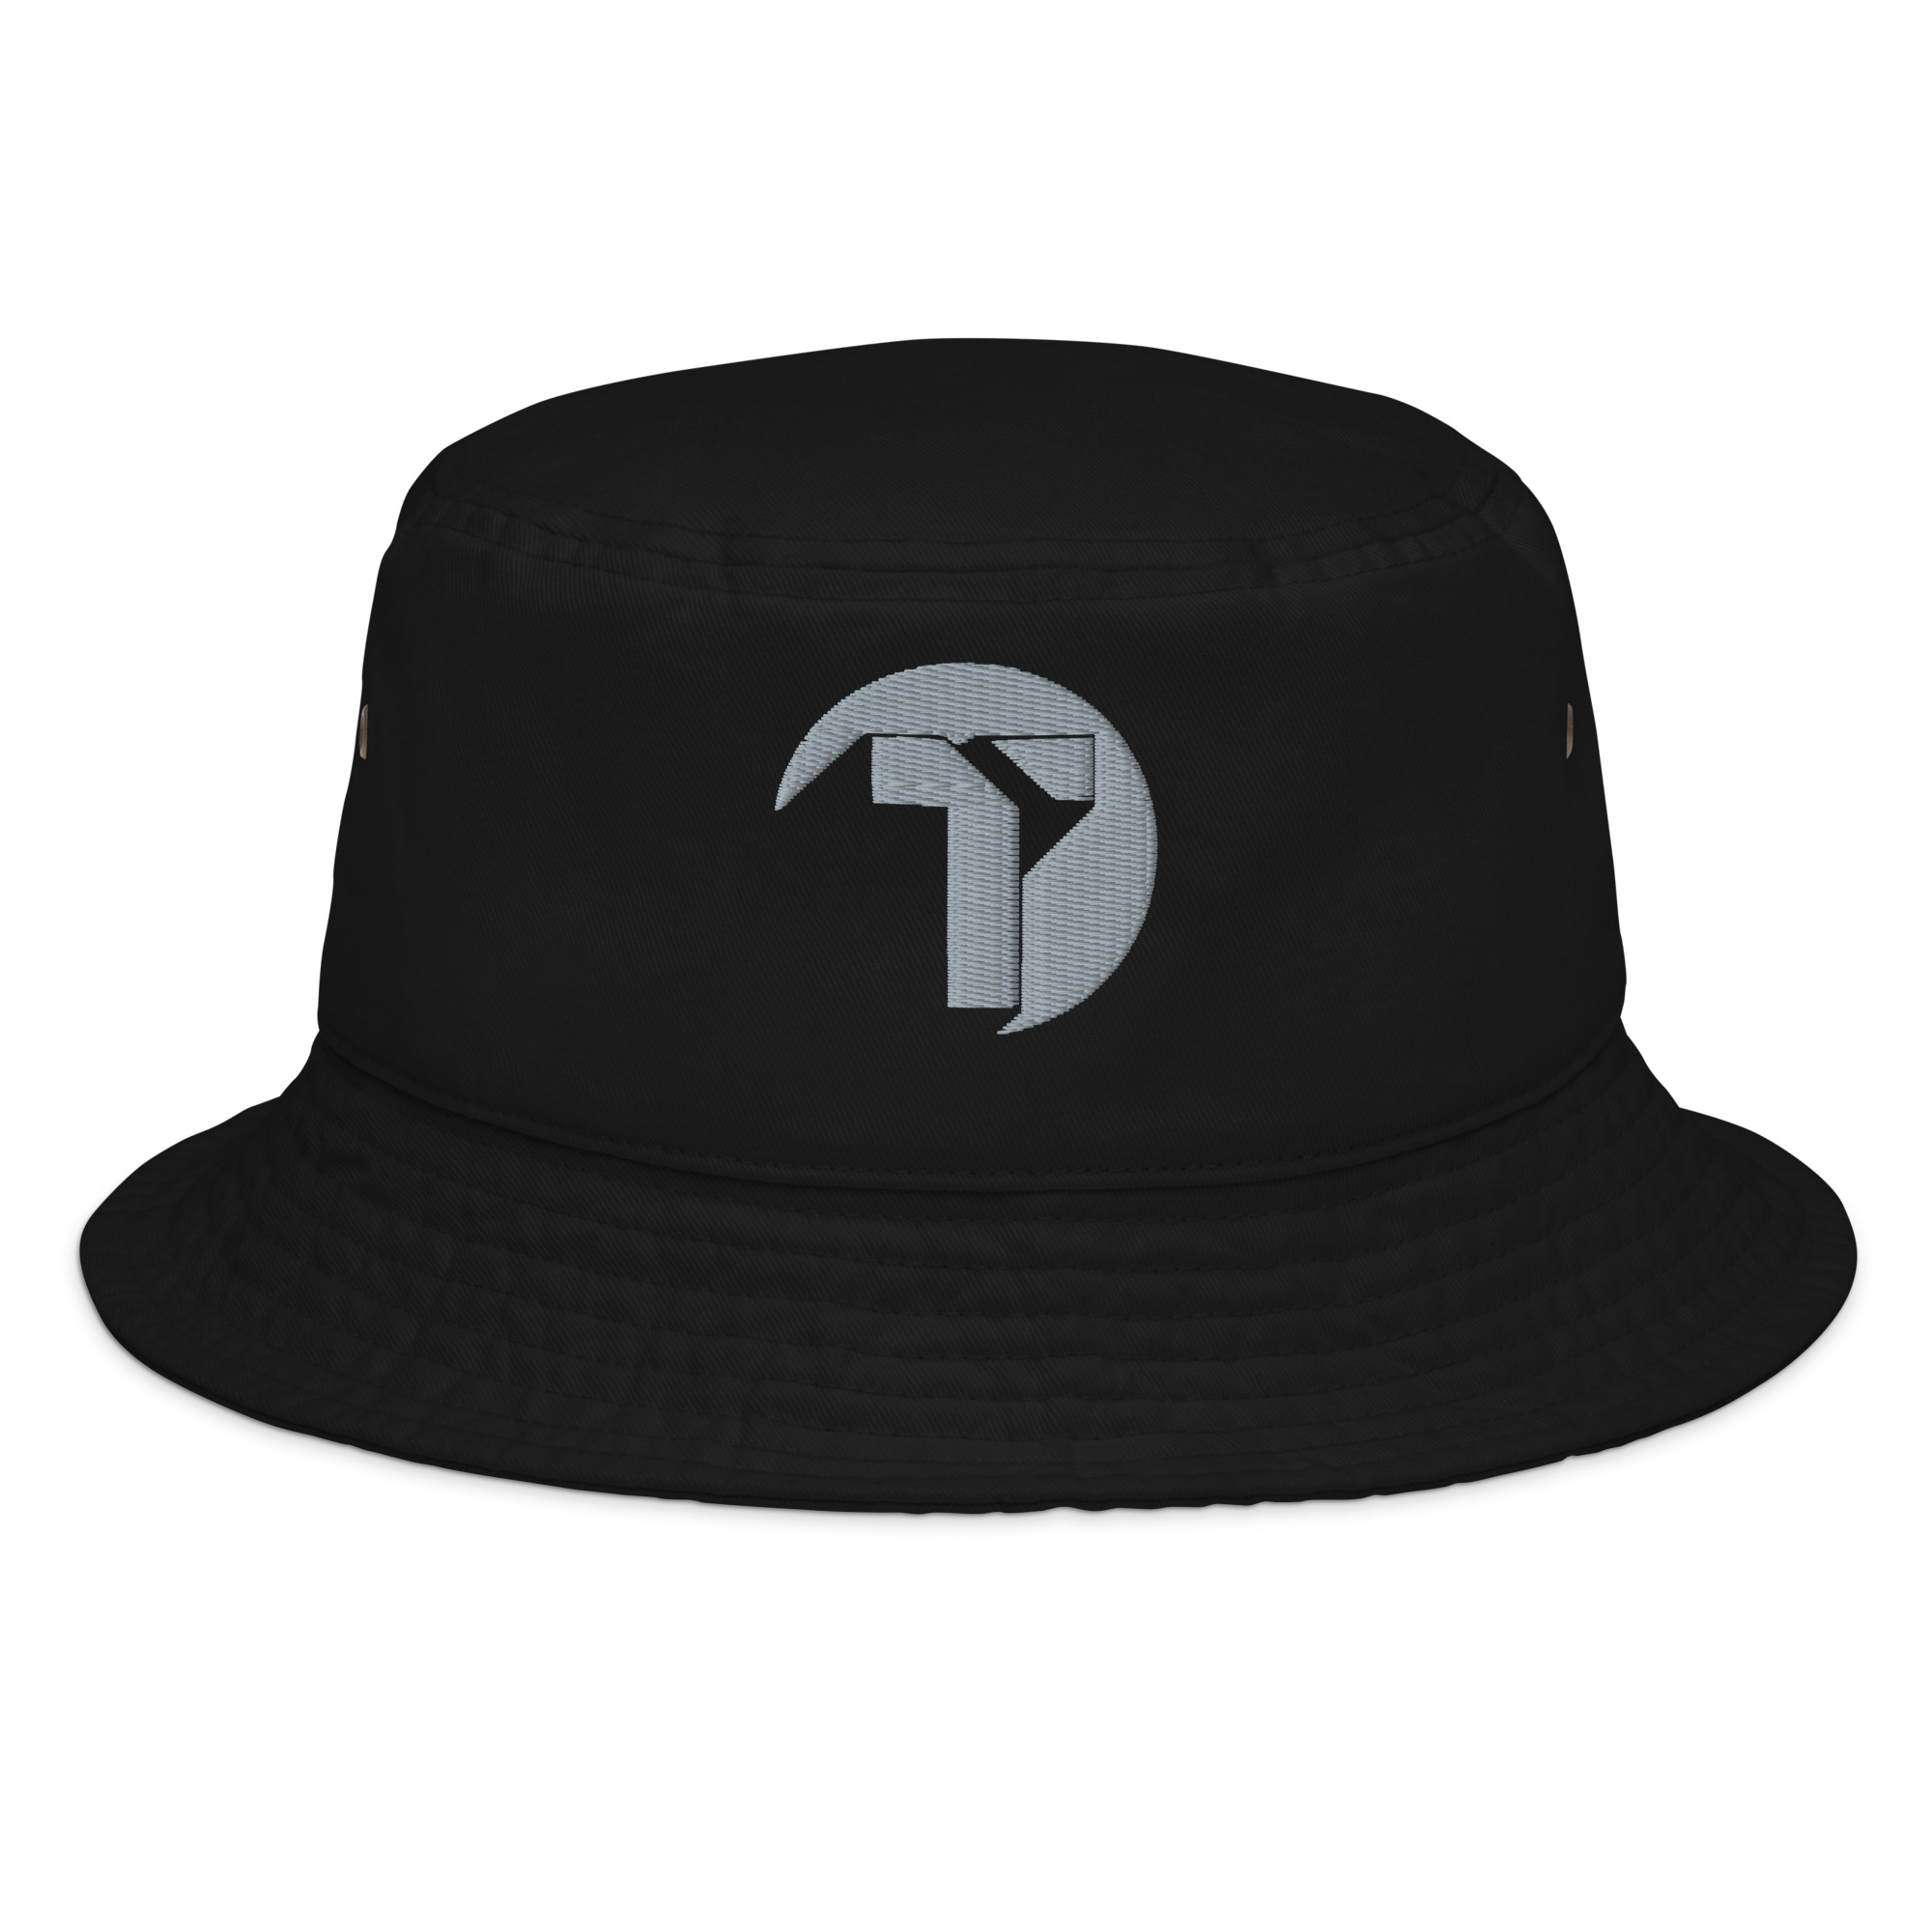 fashion-bucket-hat-black-front-64b707dba75ad.jpg